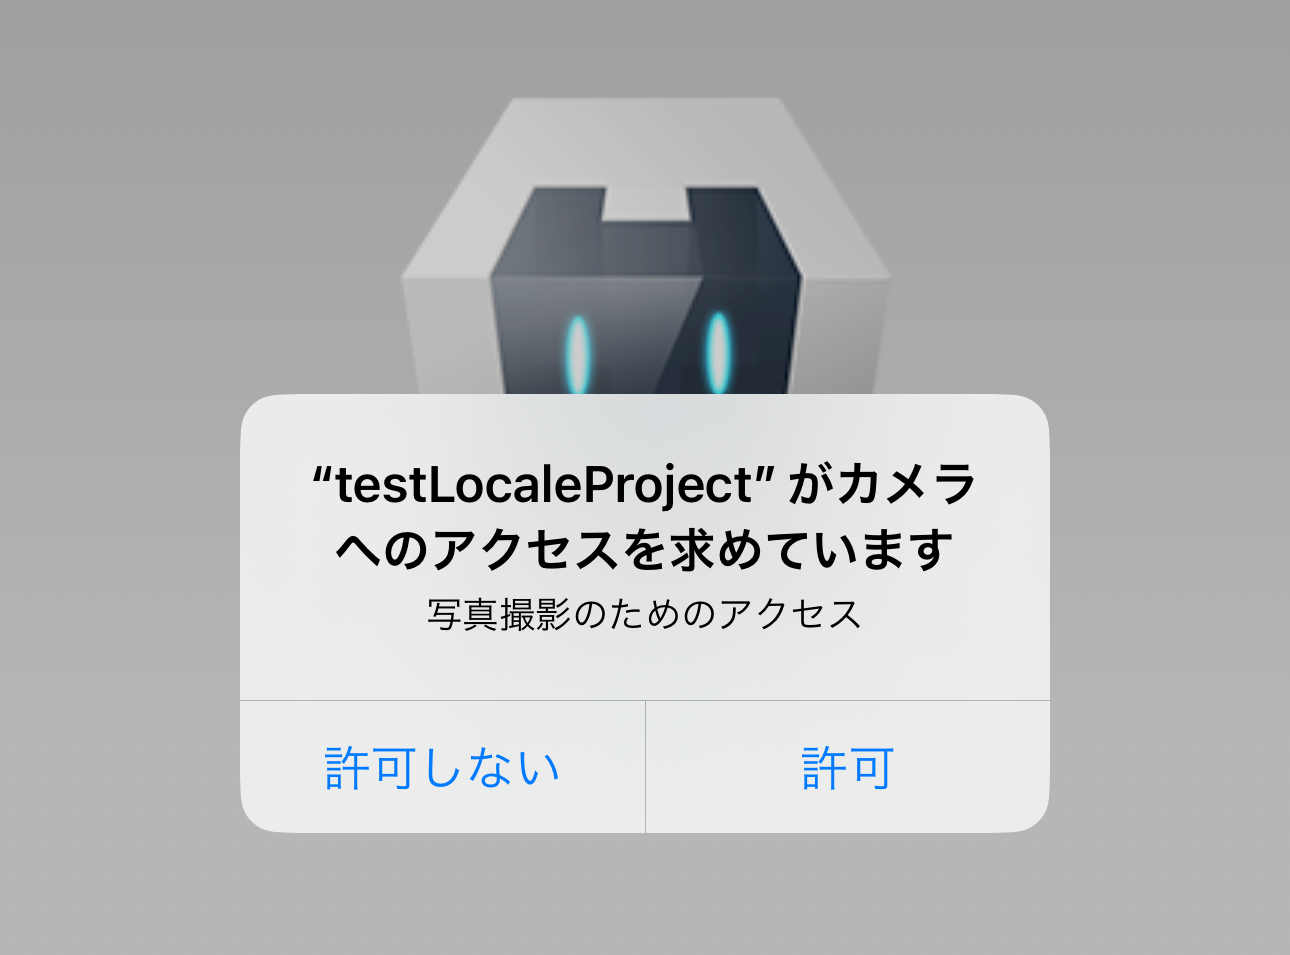 Japanese Localization Example